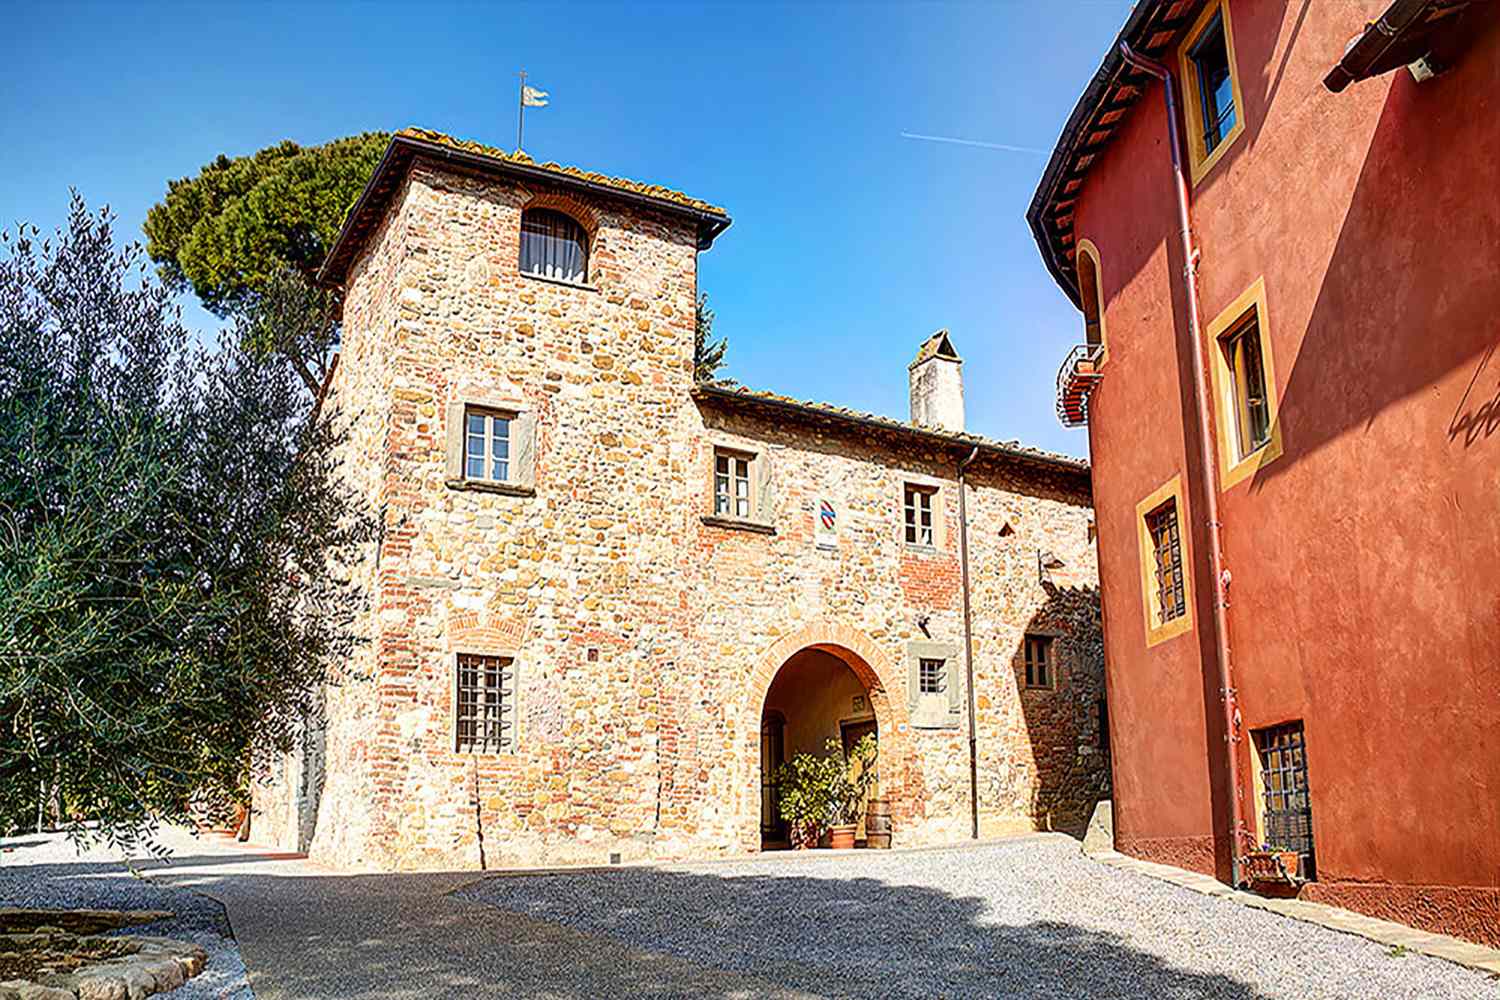 Salvadonica - Borgo del Chianti, Tuscany - Italy